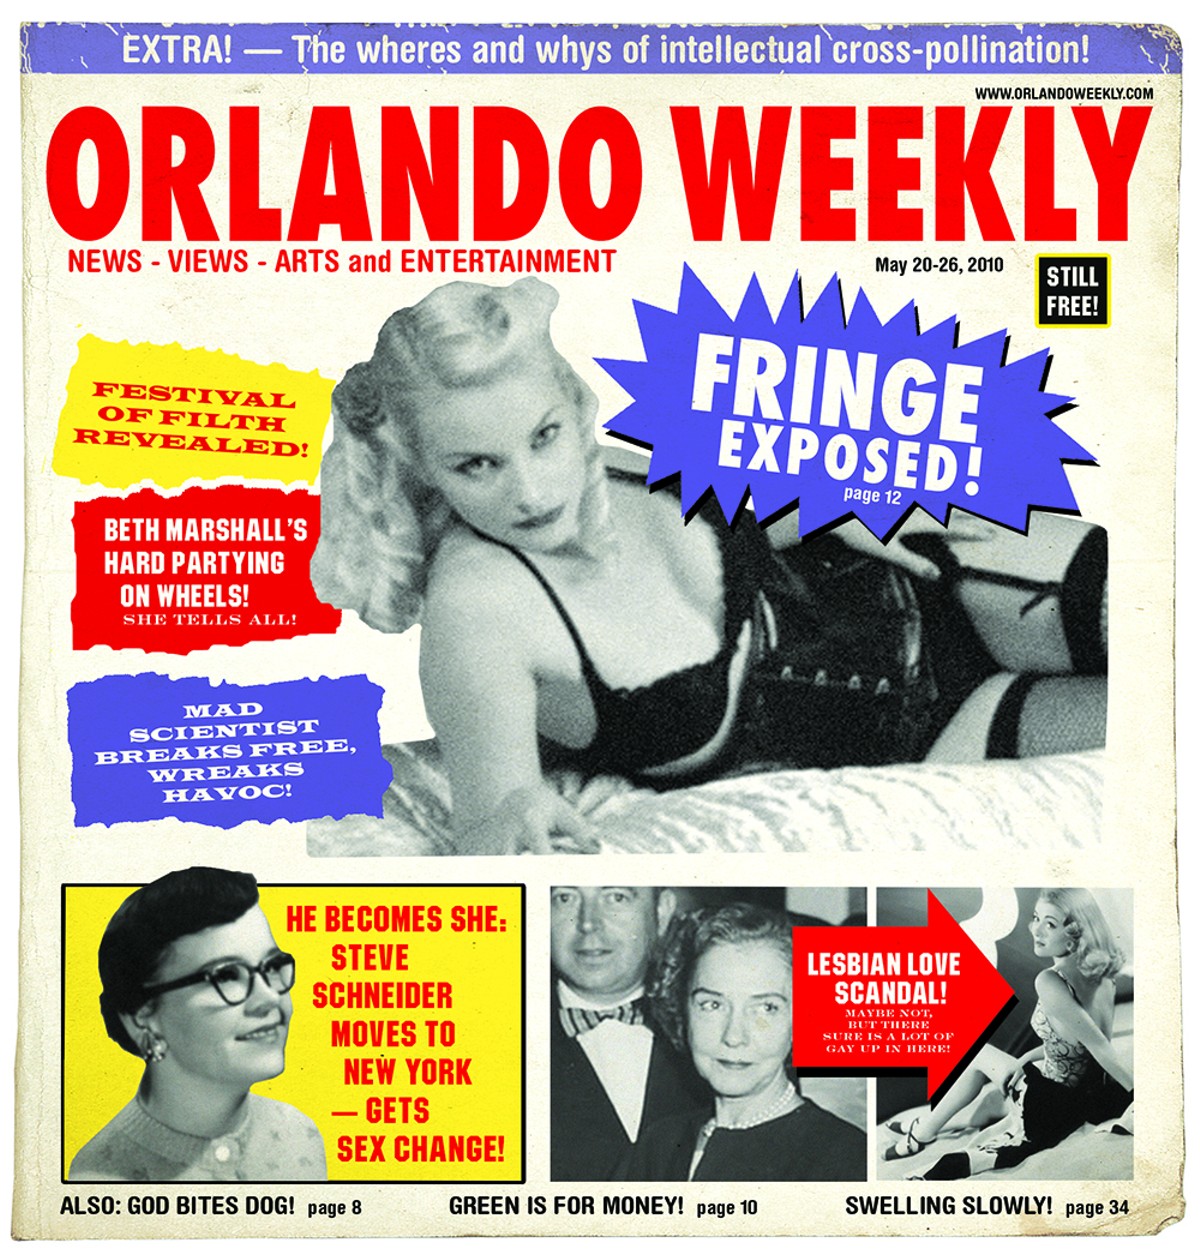 Orlando Weekly and the Orlando Fringe grew up together